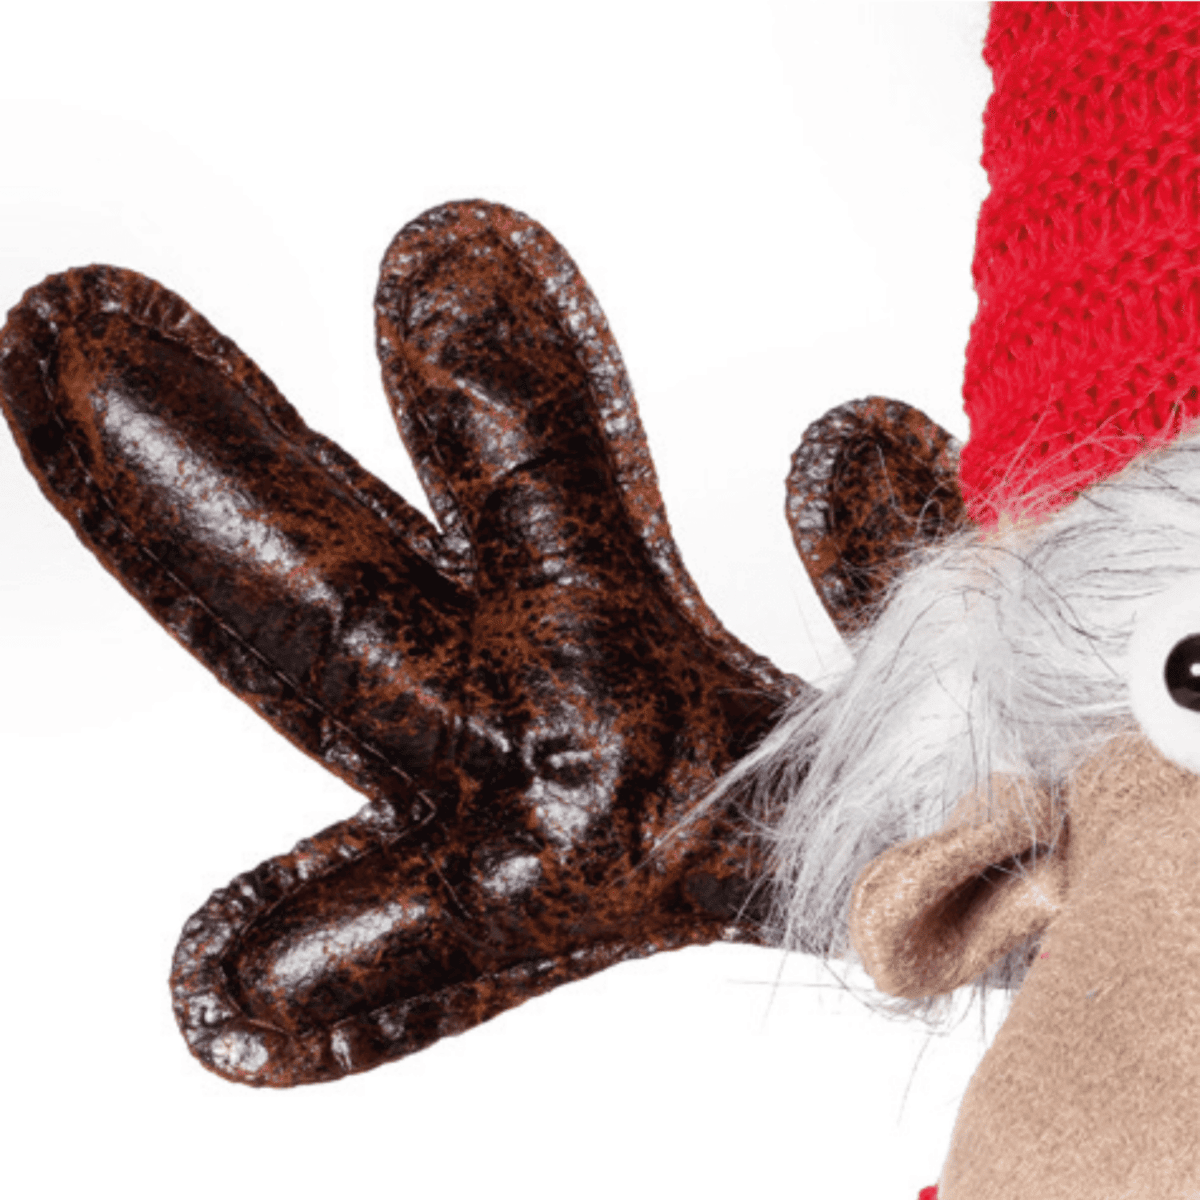 renna-lara-fritz-40-cm-pupazzi-natale-decorazioni-natalizie-dettagli